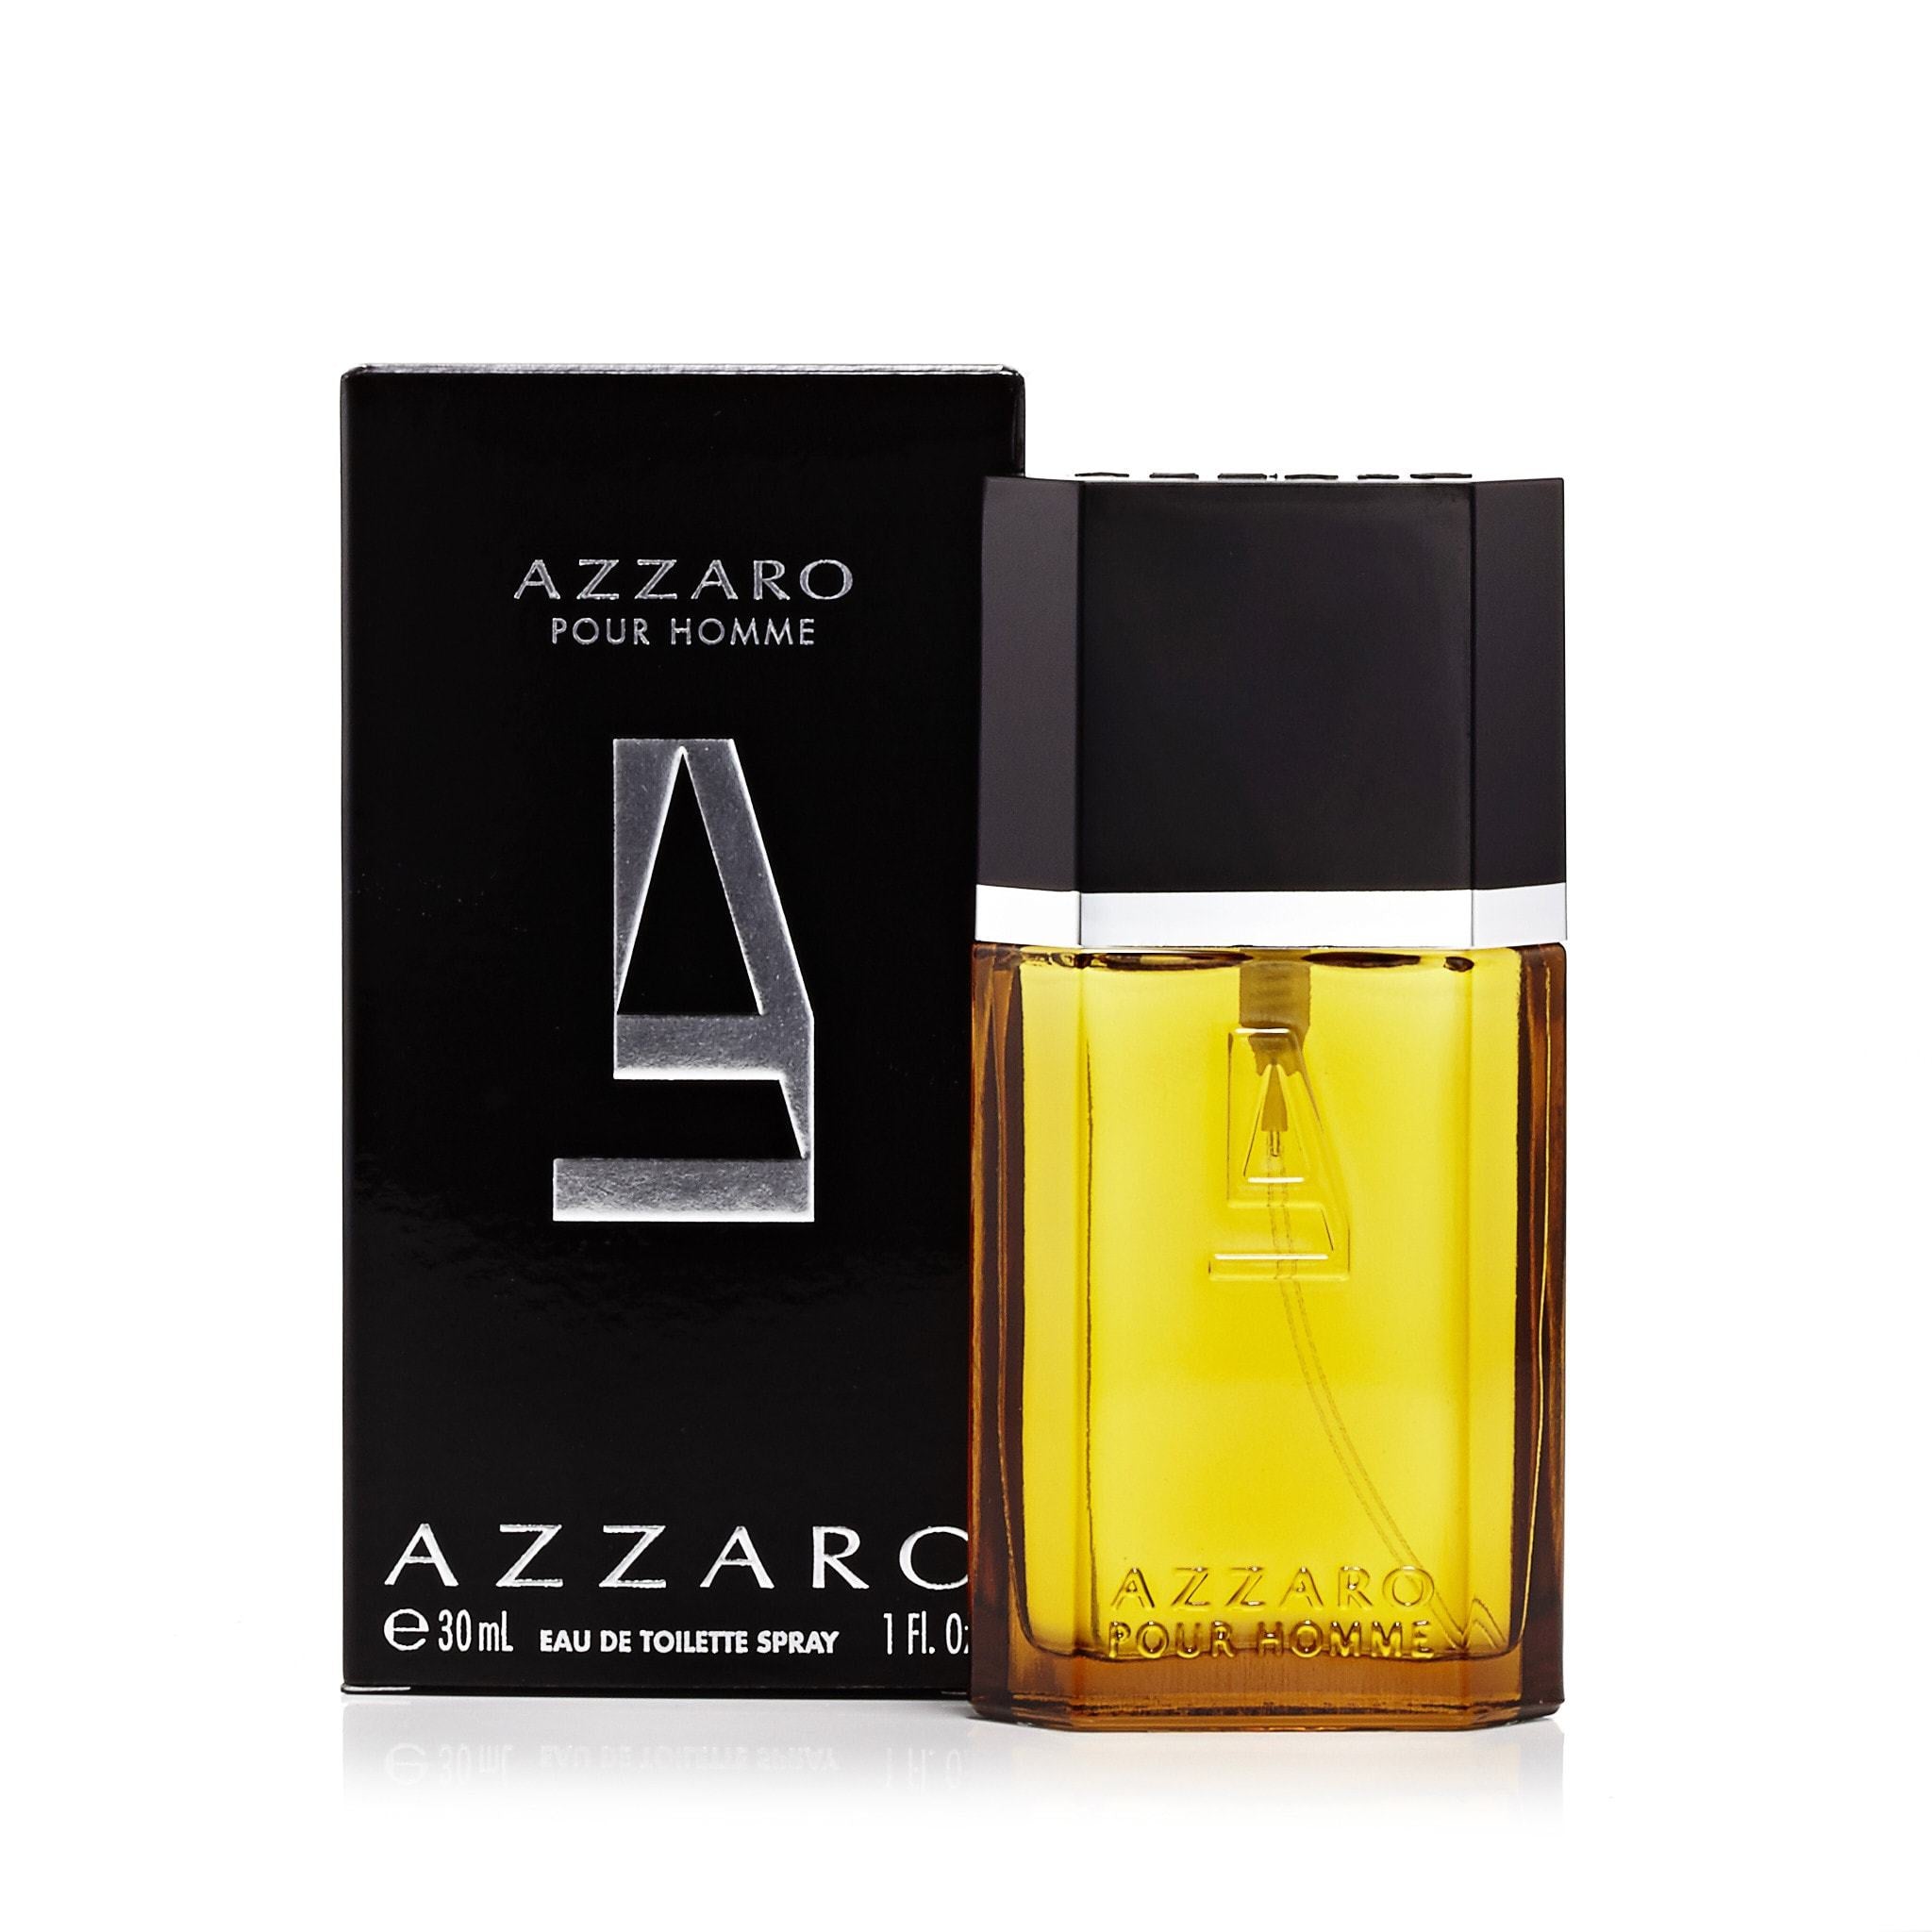 Azzaro Eau de Toilette Spray for Men by Azzaro Featured image